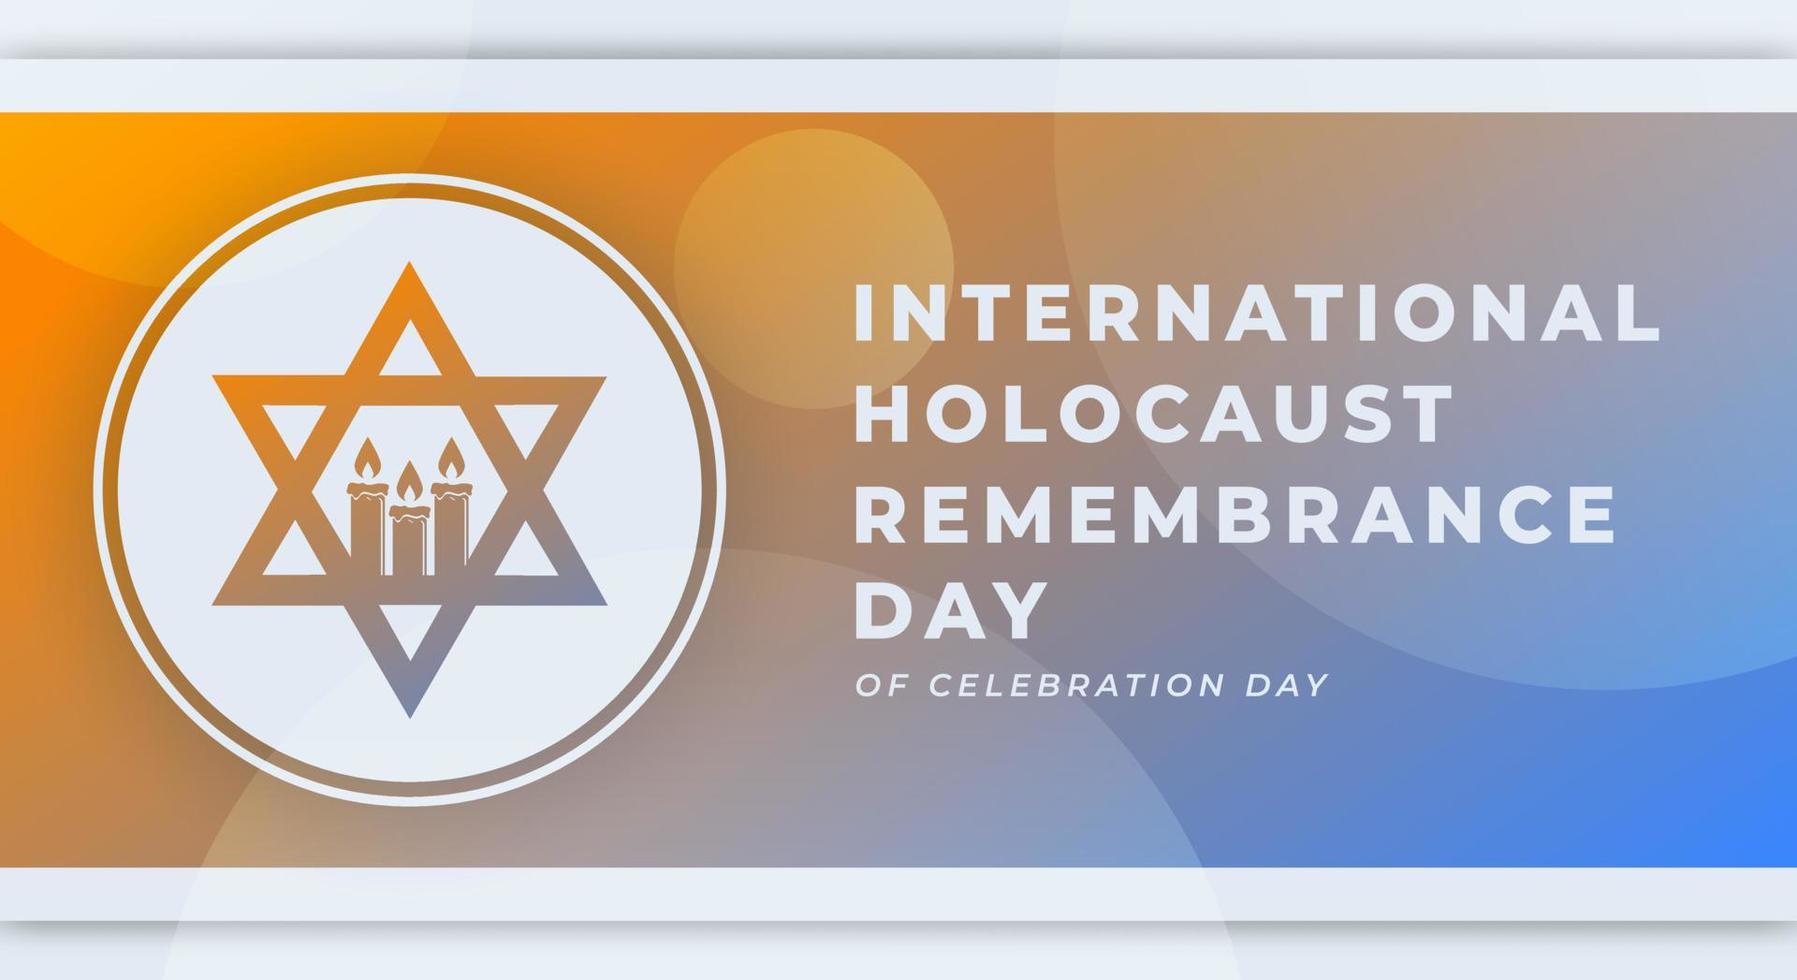 Holocaust Remembrance Day Celebration Vector Design Illustration for Background, Poster, Banner, Advertising, Greeting Card